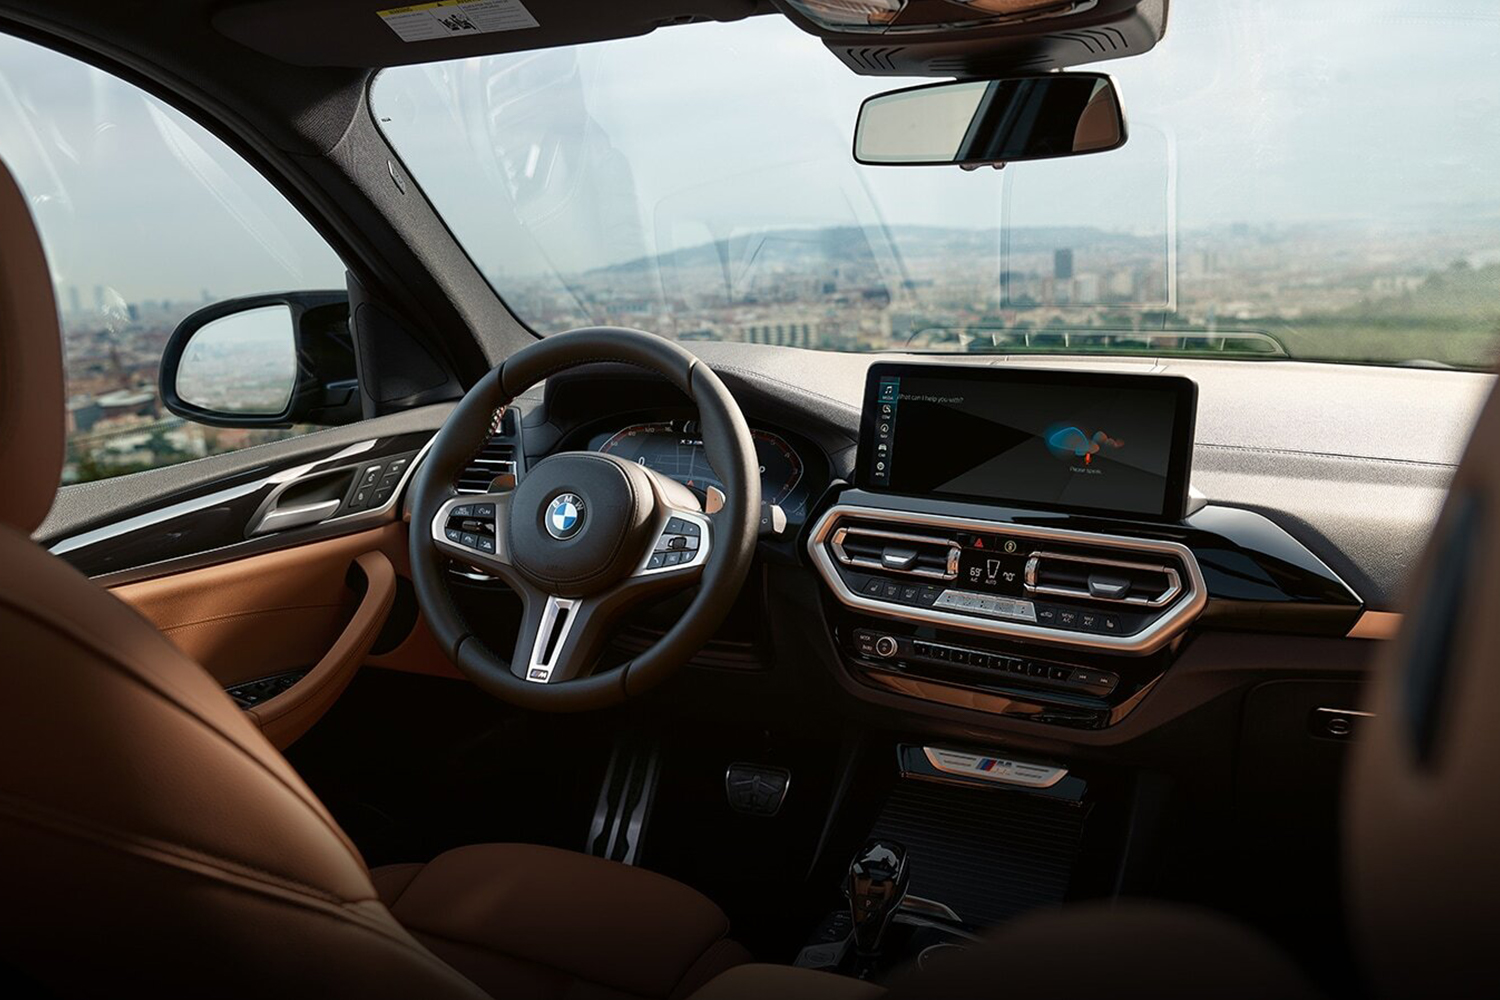 The interior of the 2022 BMW X3 M40i SUV